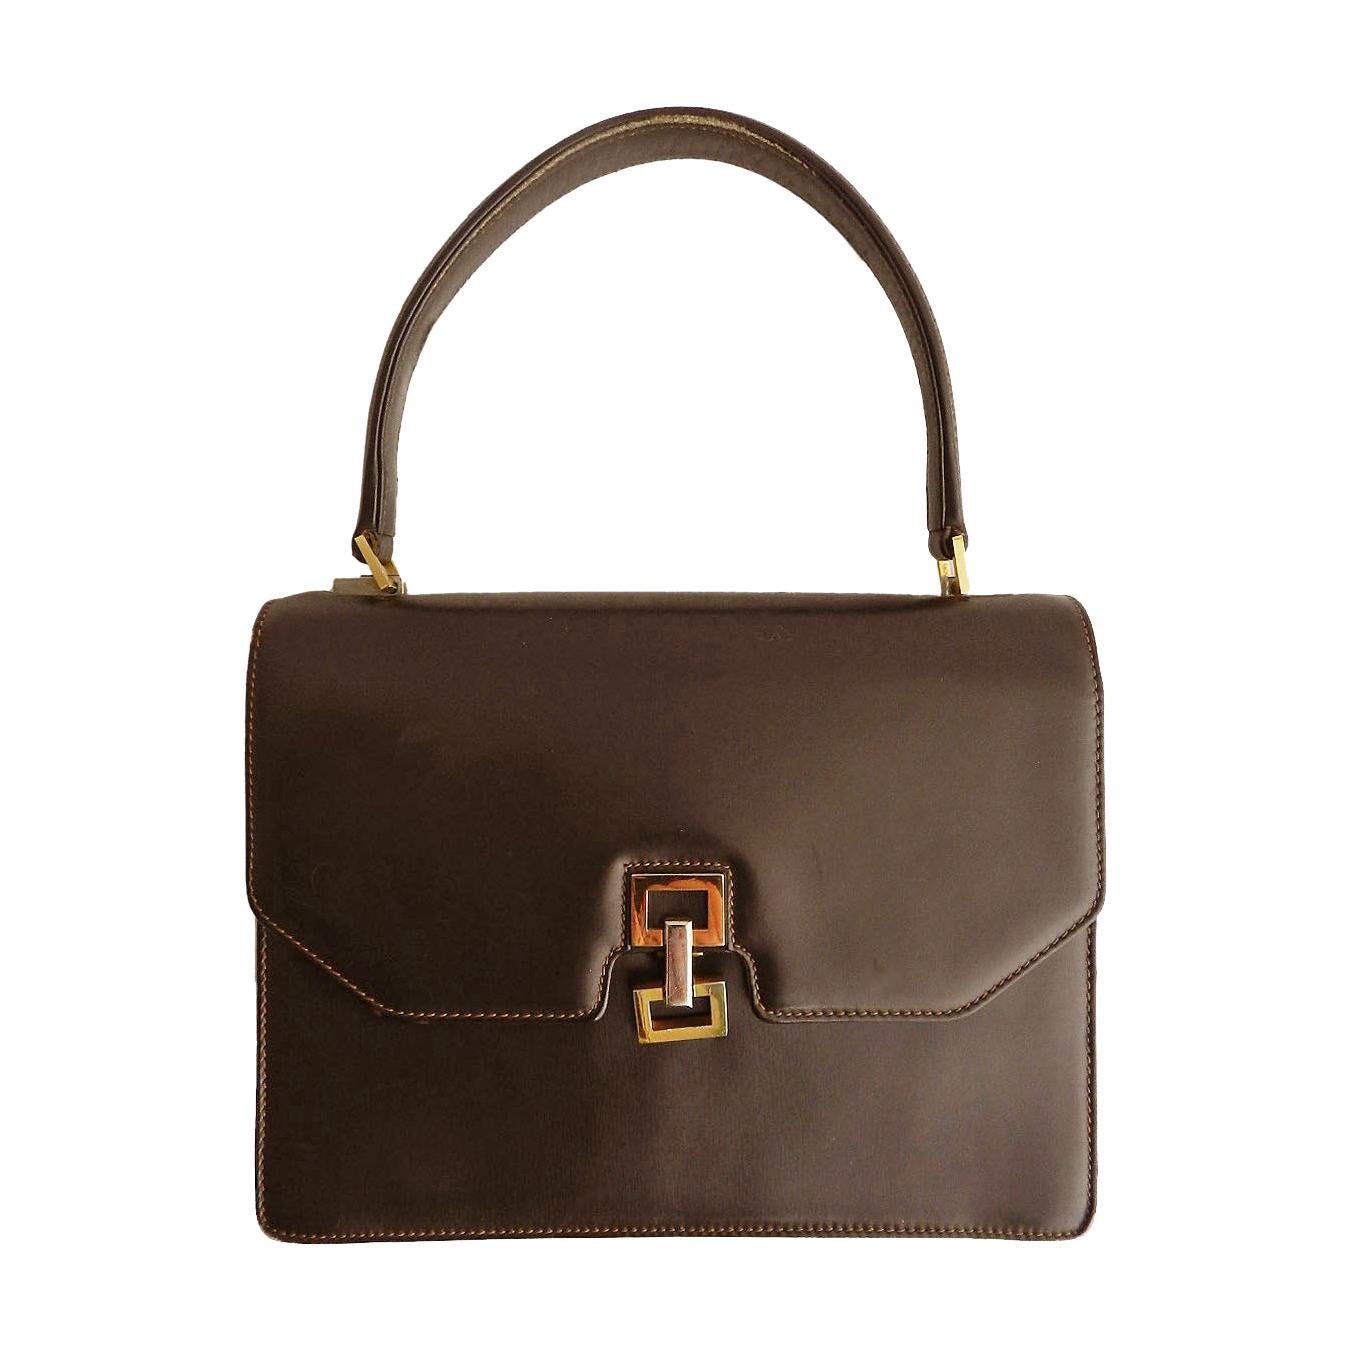 Gucci Brown Leather Handbag Top Handles Bag Vintage, Late 20th Century